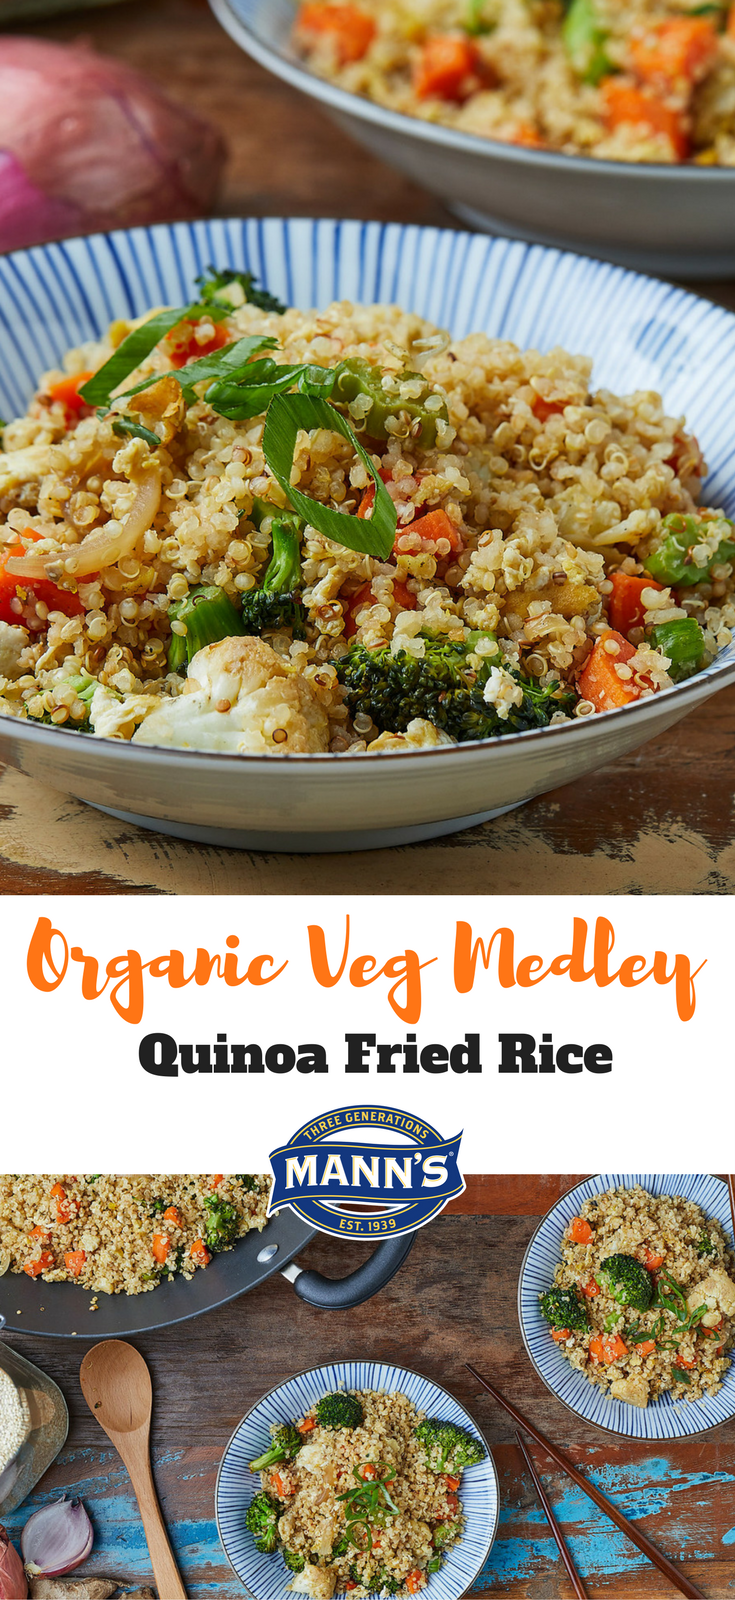 Organic Veg Medley Quinoa Fried Rice | Mann's Fresh Vegetables